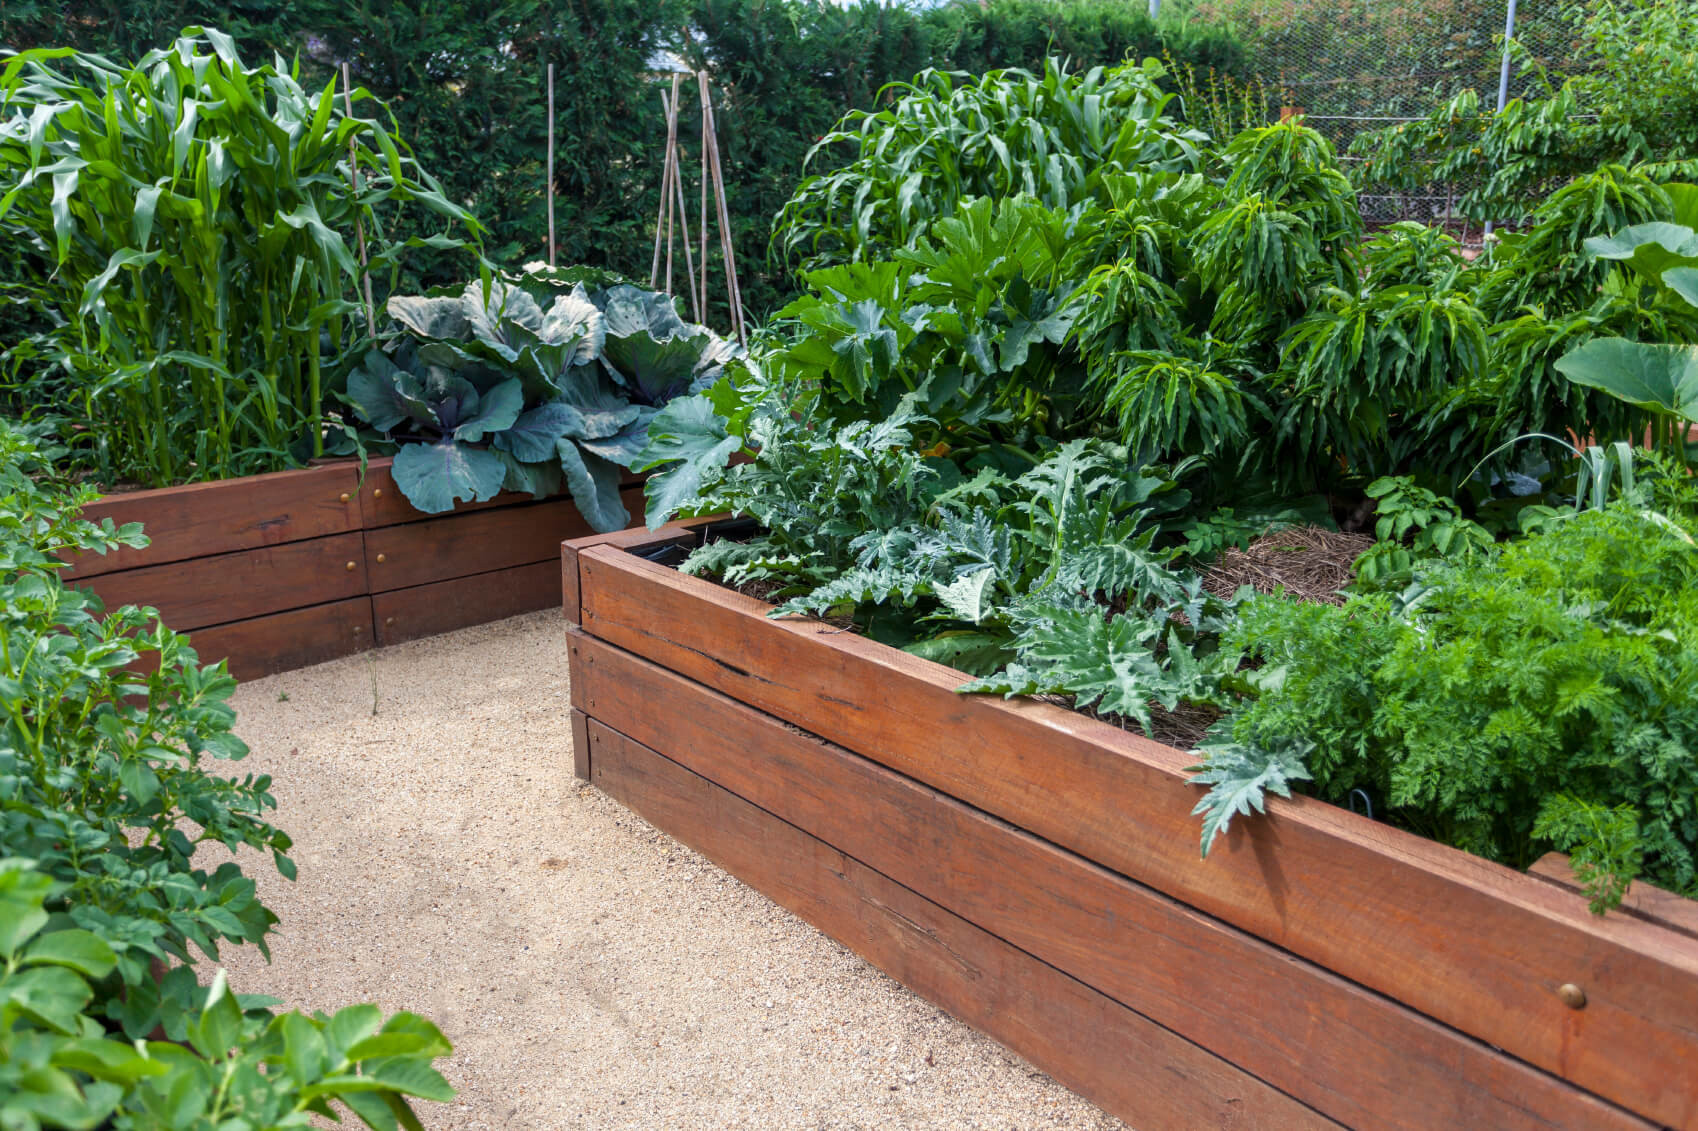 Best ideas about Raised Garden Ideas
. Save or Pin 41 Backyard Raised Bed Garden Ideas Now.